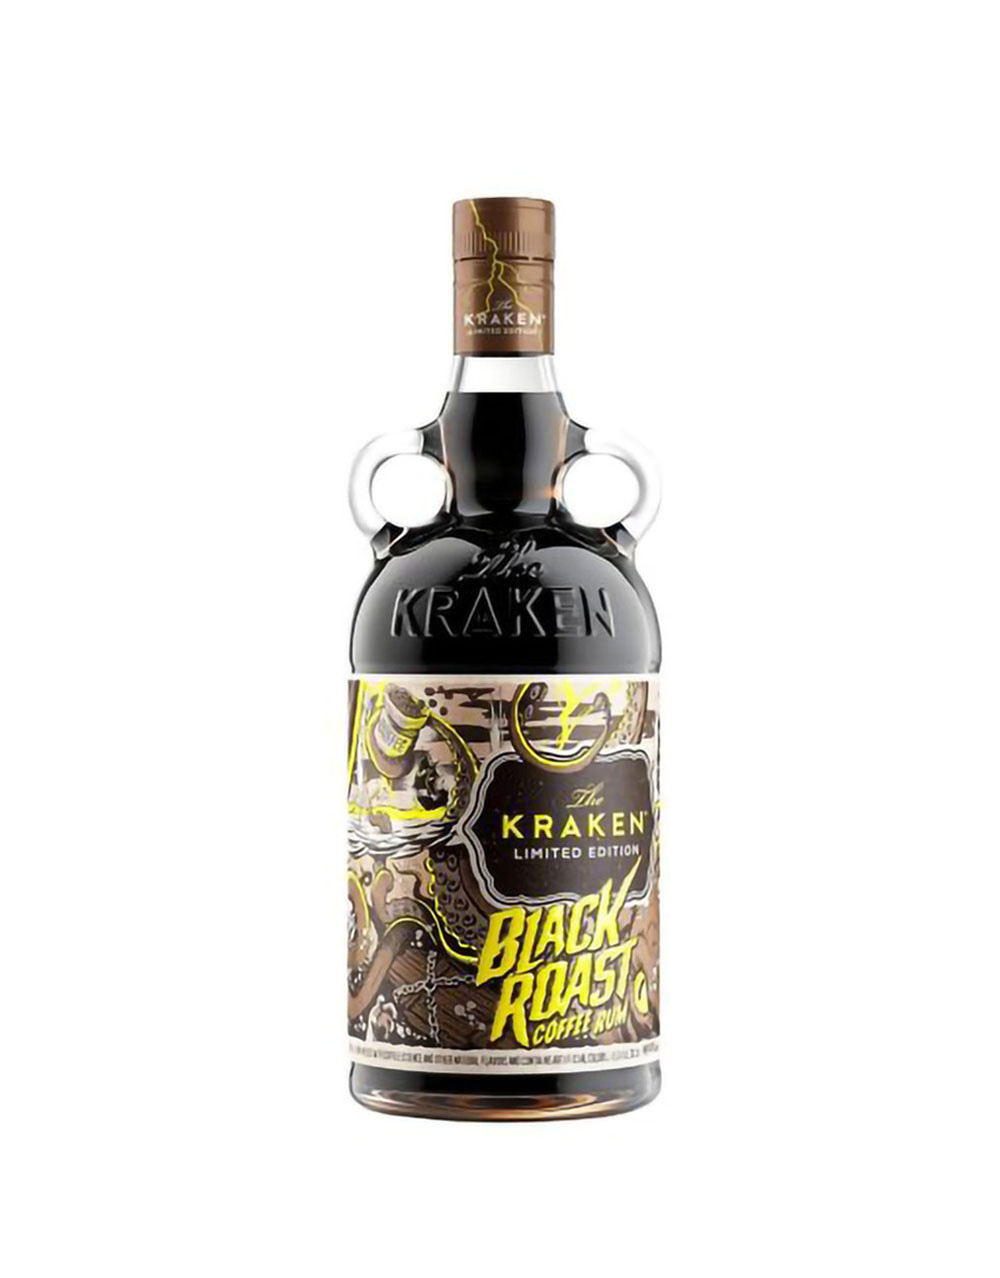 The Kraken Black Roast Coffee Limited Edition Rum